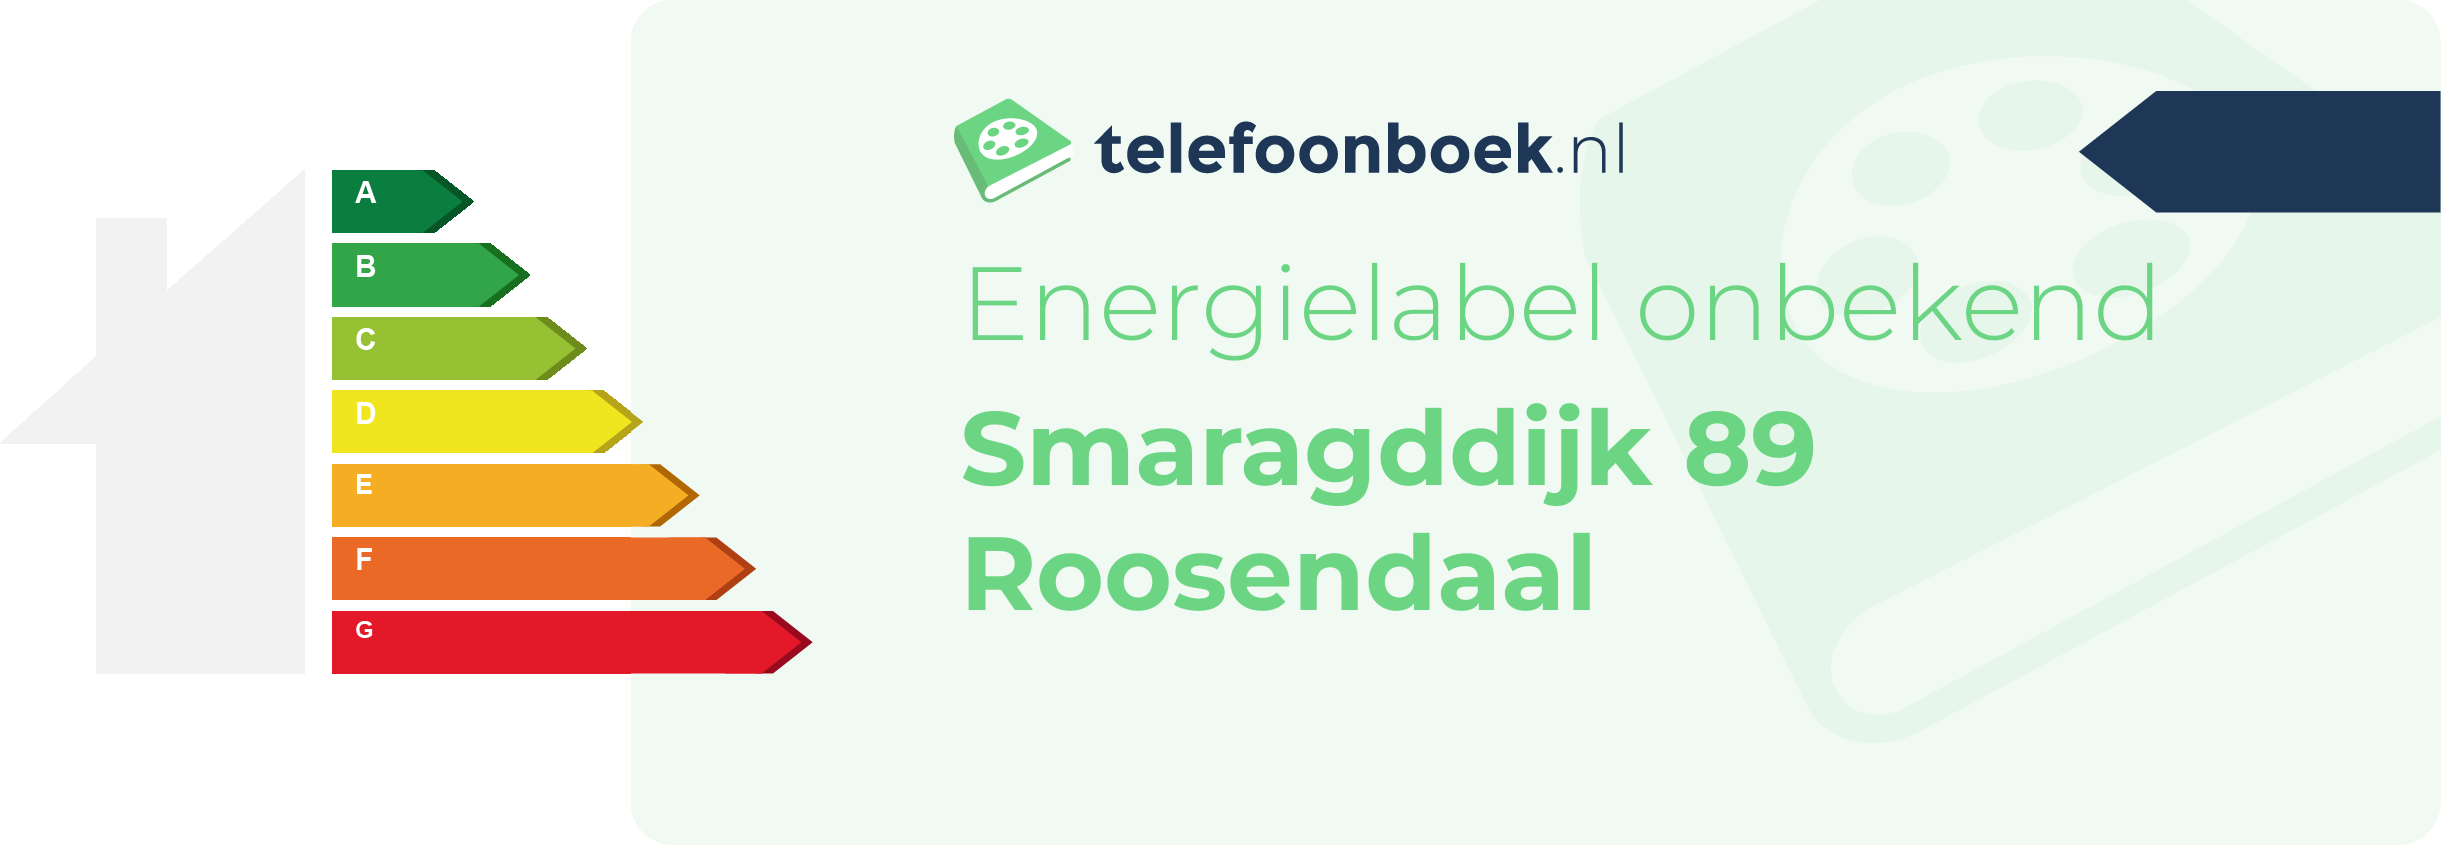 Energielabel Smaragddijk 89 Roosendaal